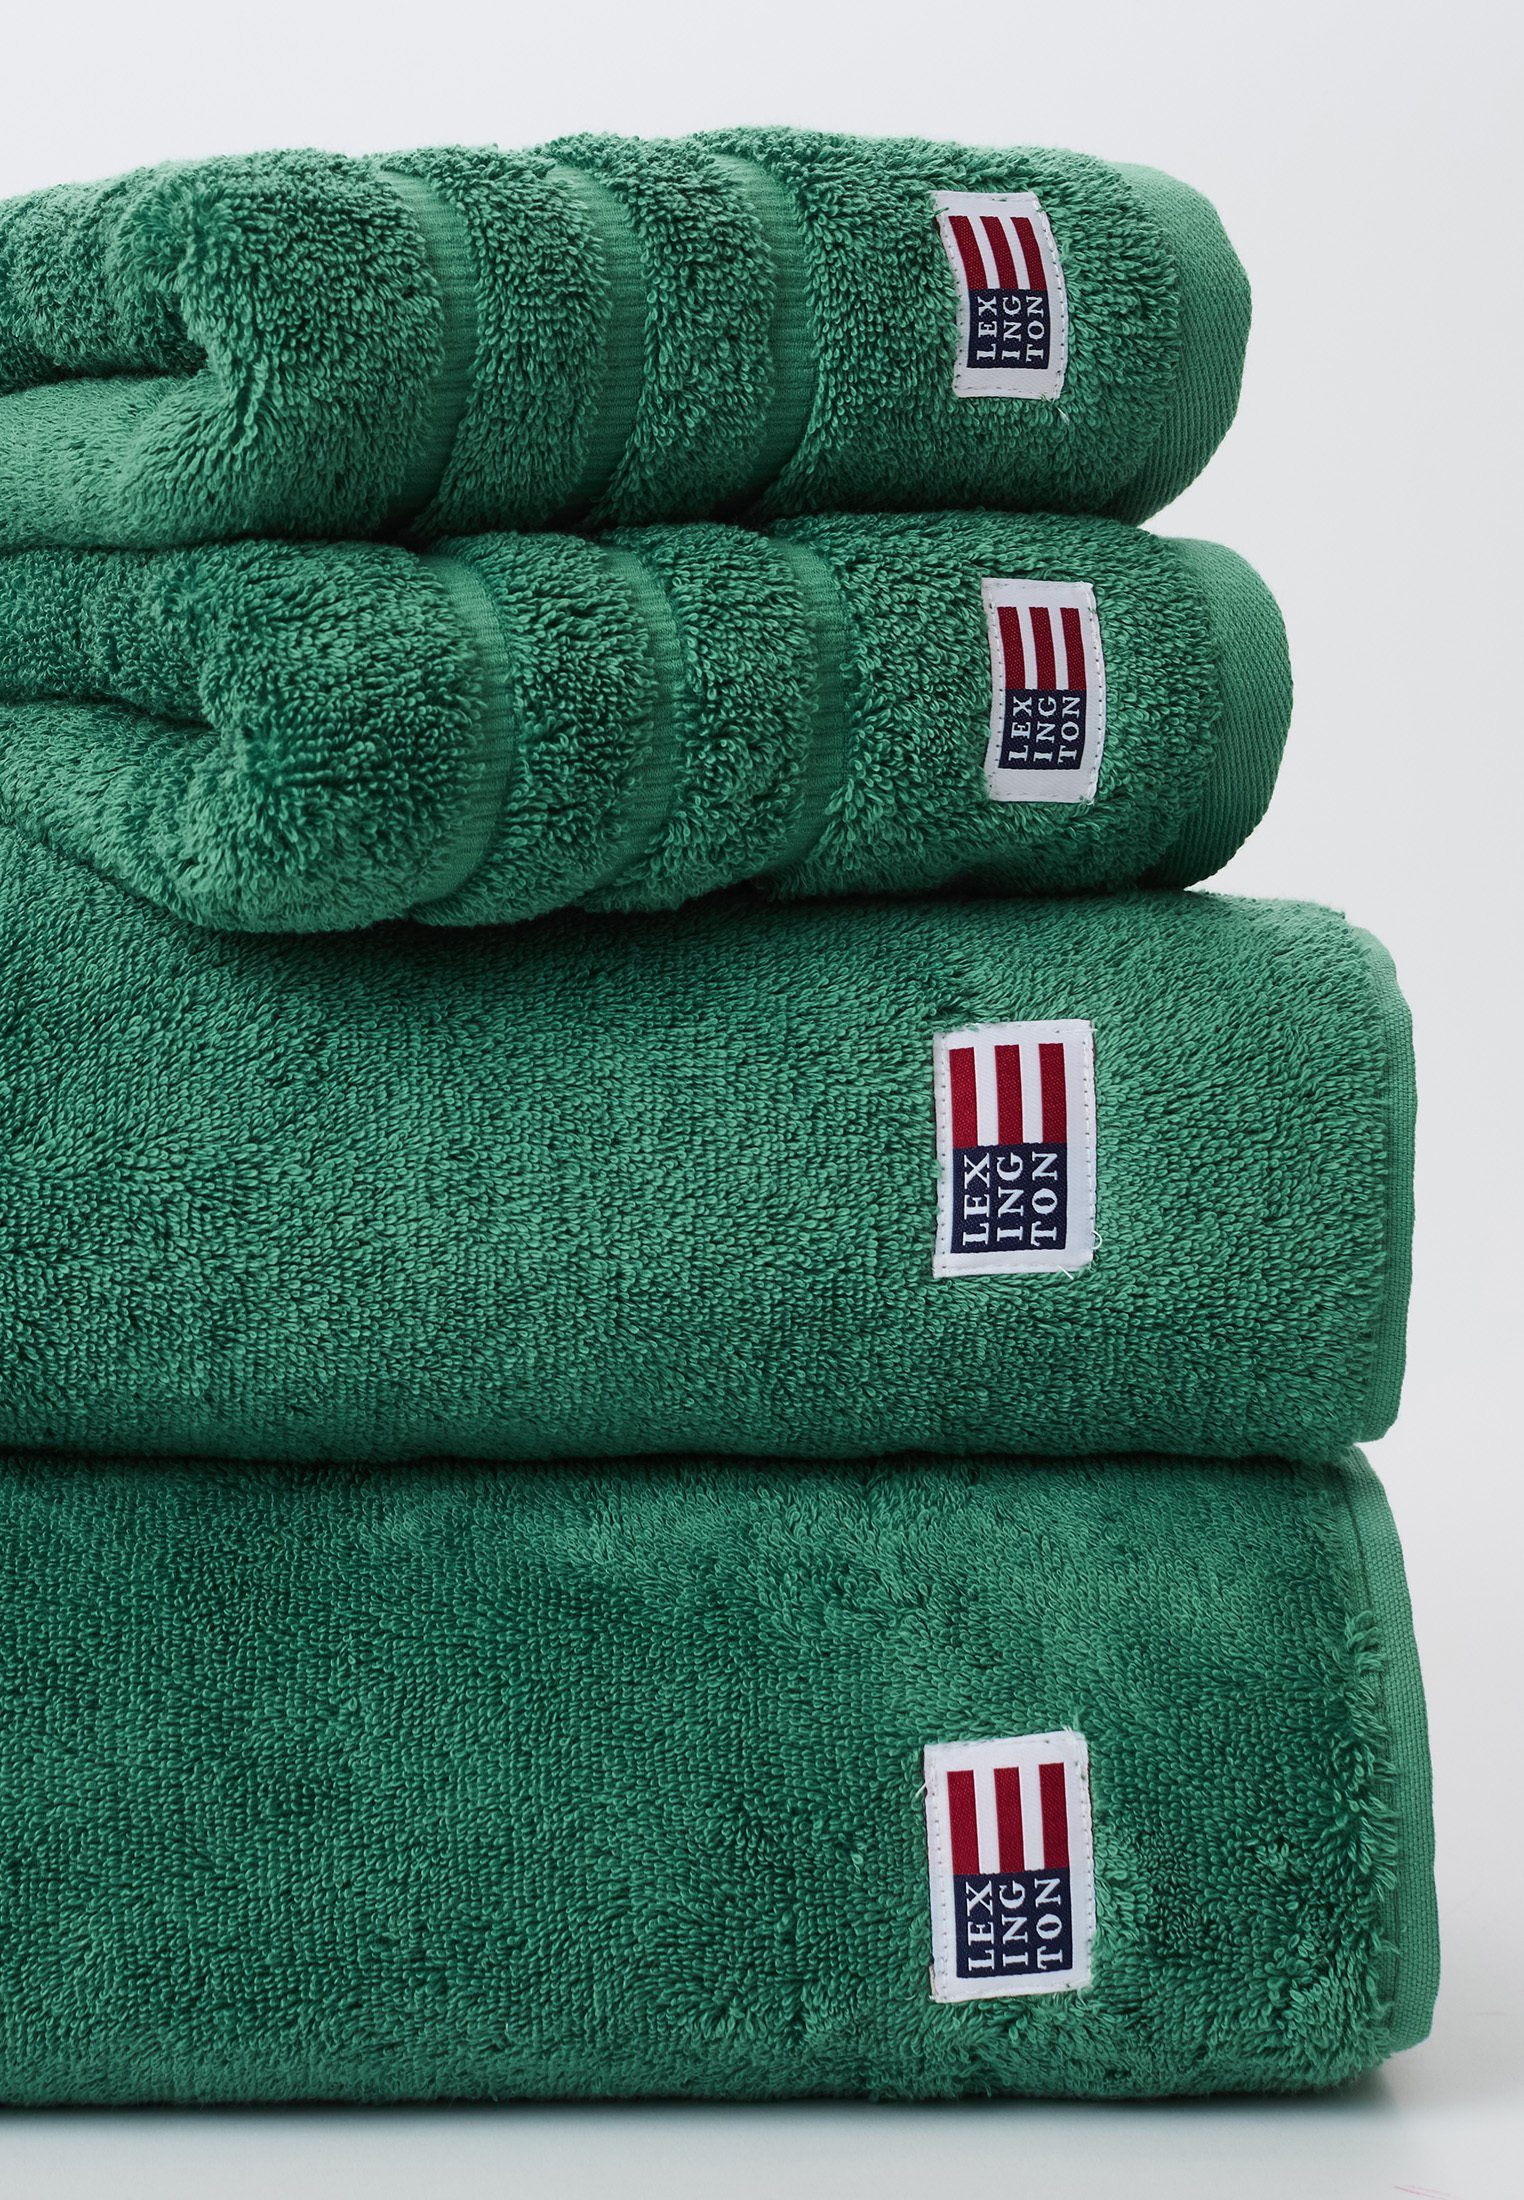 Towel Original Handtuch Lexington leaves green